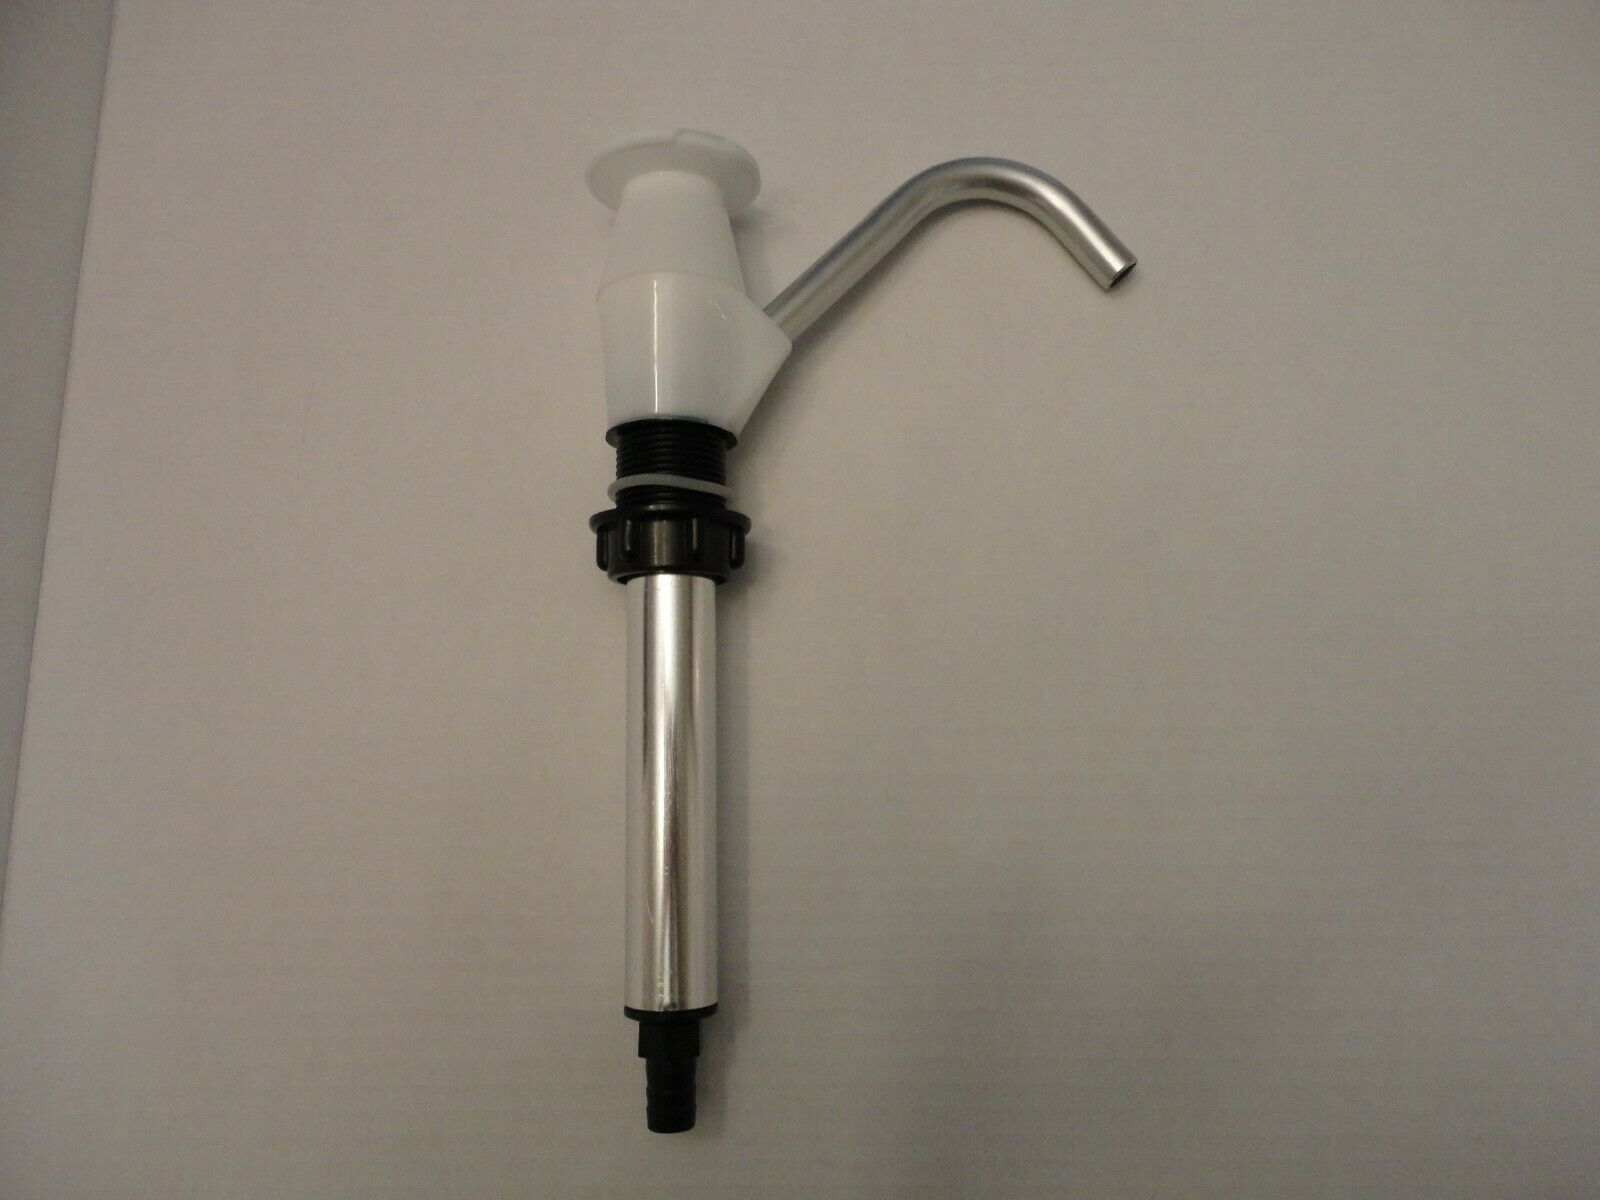 Manual Hand Press Drinking Water Pump Gallon Dispenser Syphon BBQ RV Boat Home - $21.73